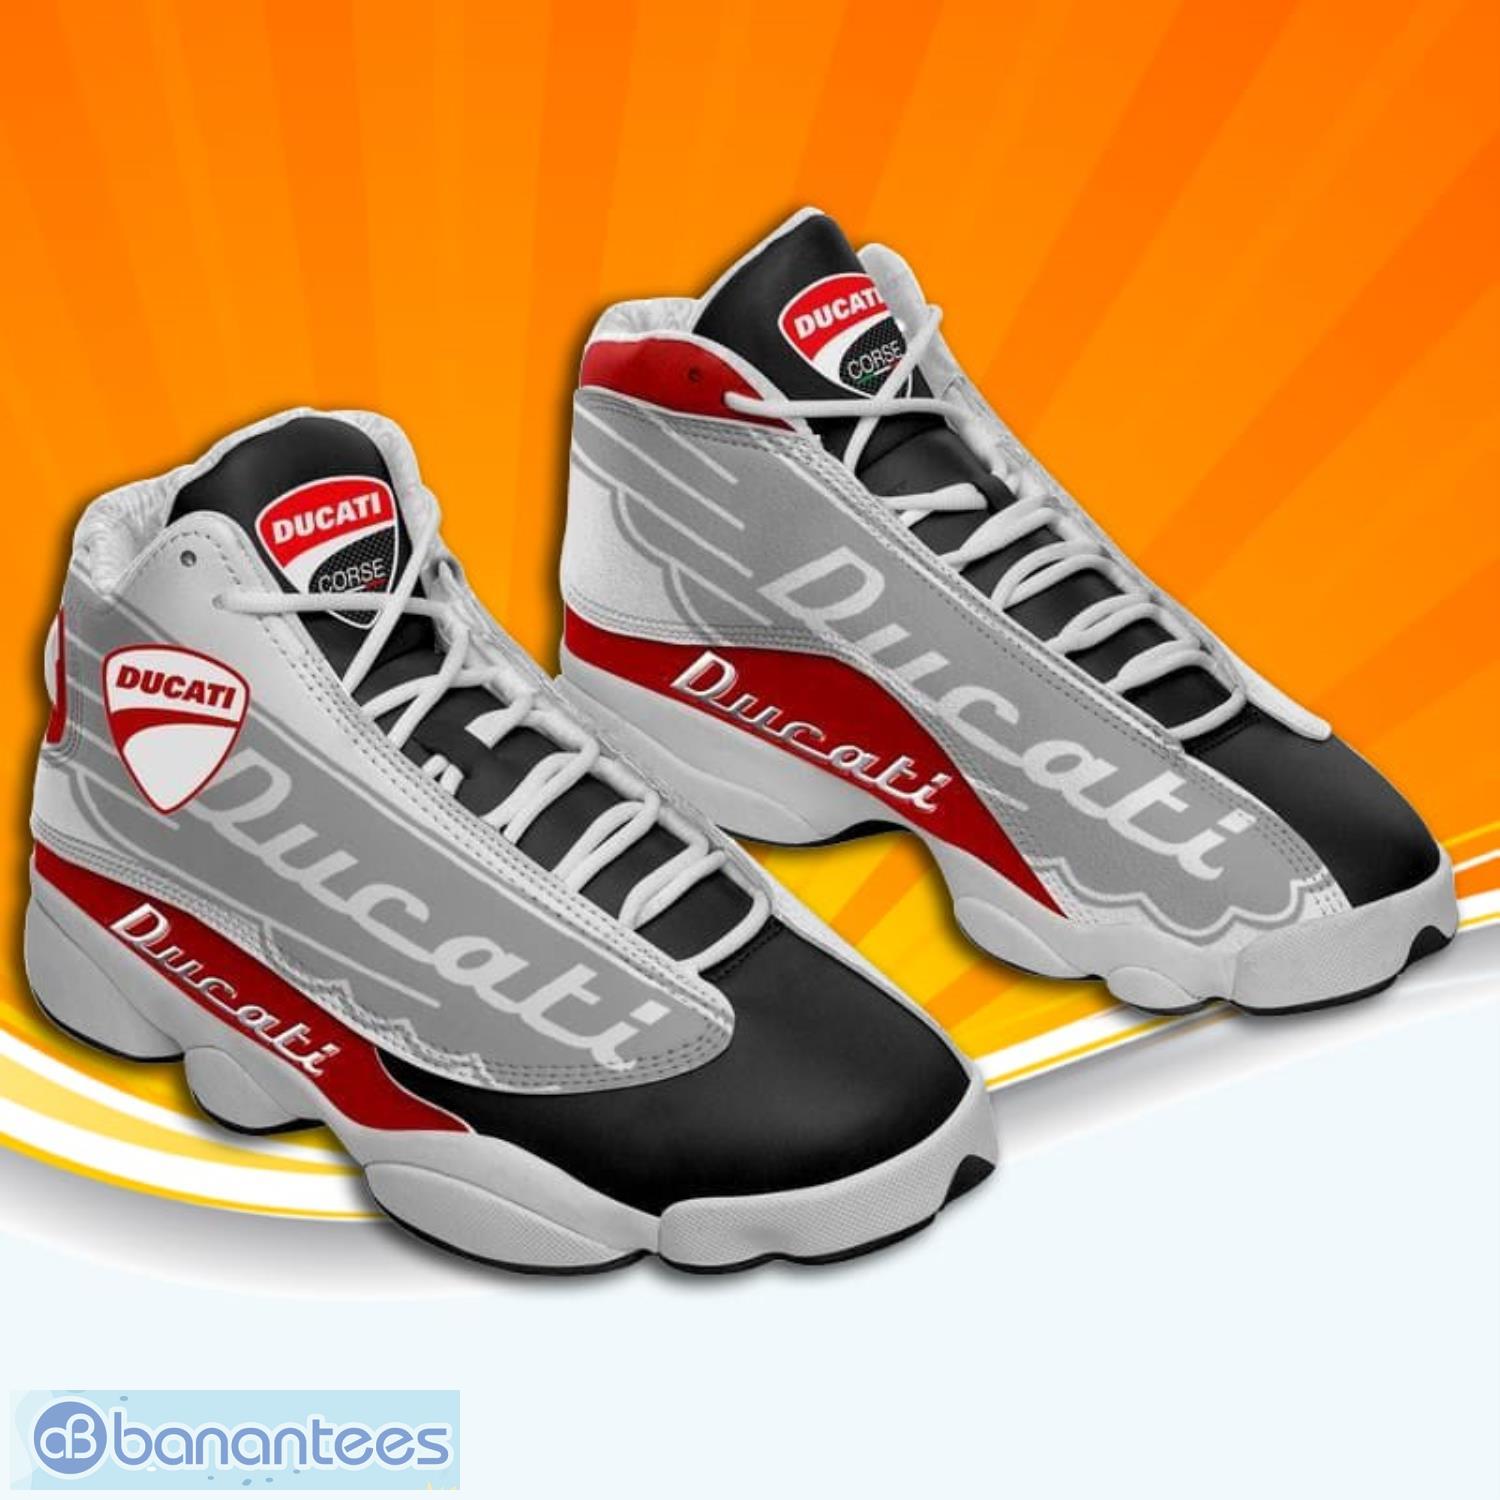 Ducati Sport Shoes Air Jordan 13 Sneaker Shoes Product Photo 2